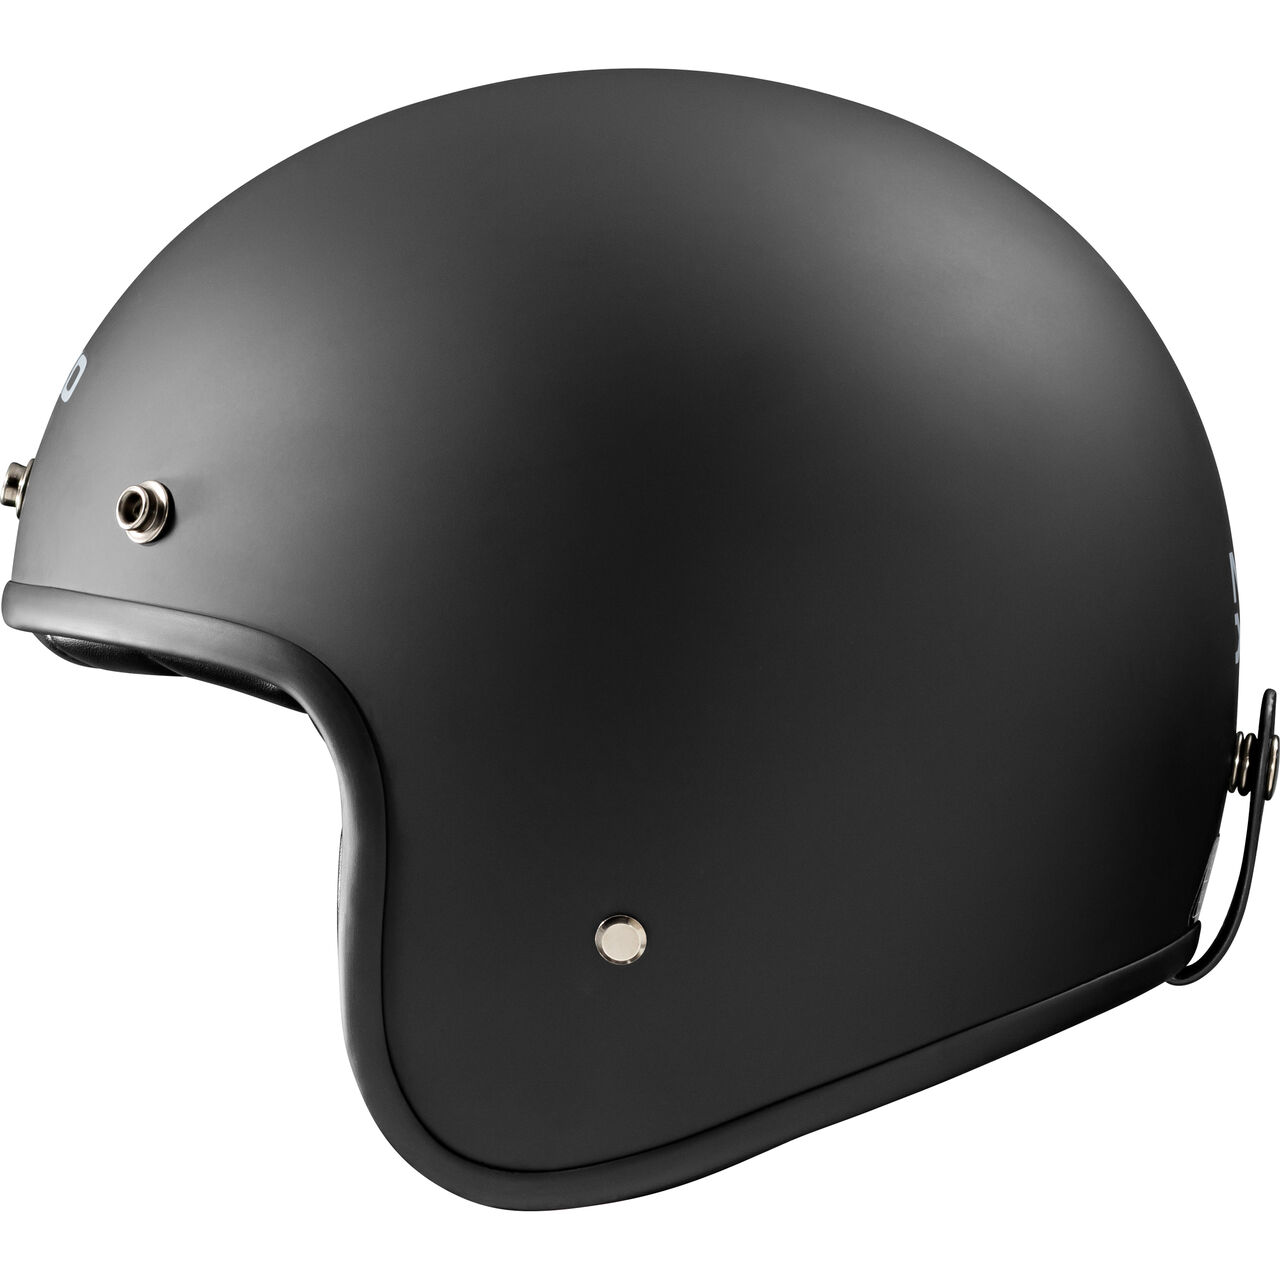 Nexo Jet Helmet Fiberglas Urban 2.0 flat black Open-Face-Helmet